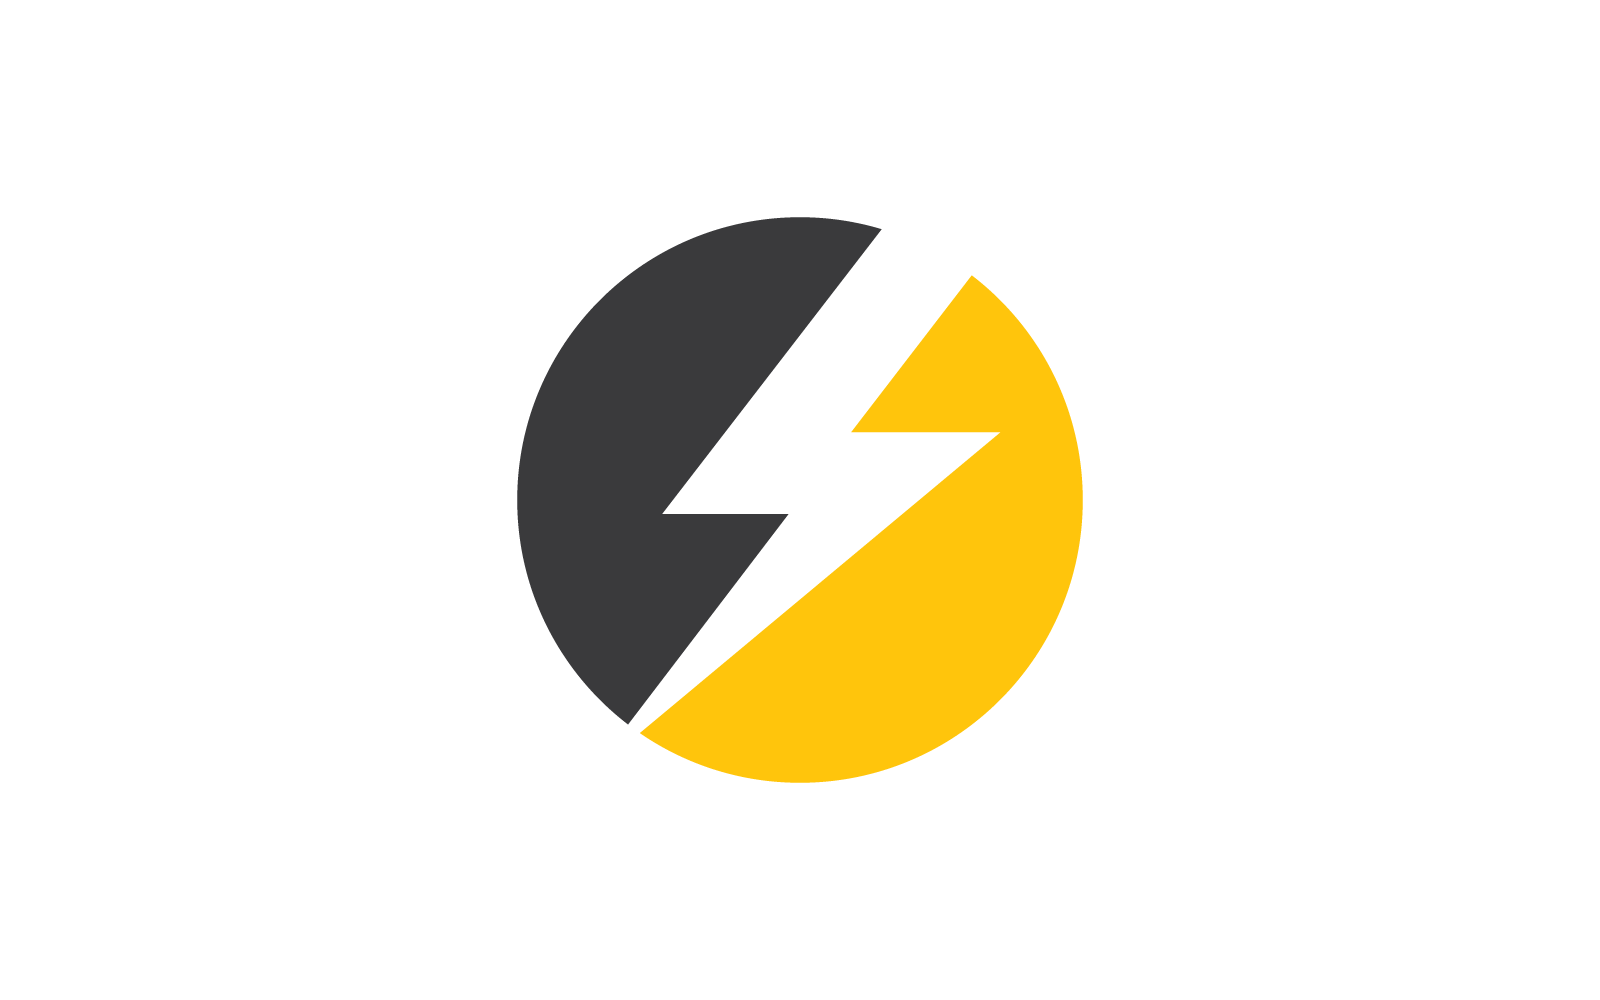 Power lightning logo illustration vector template design